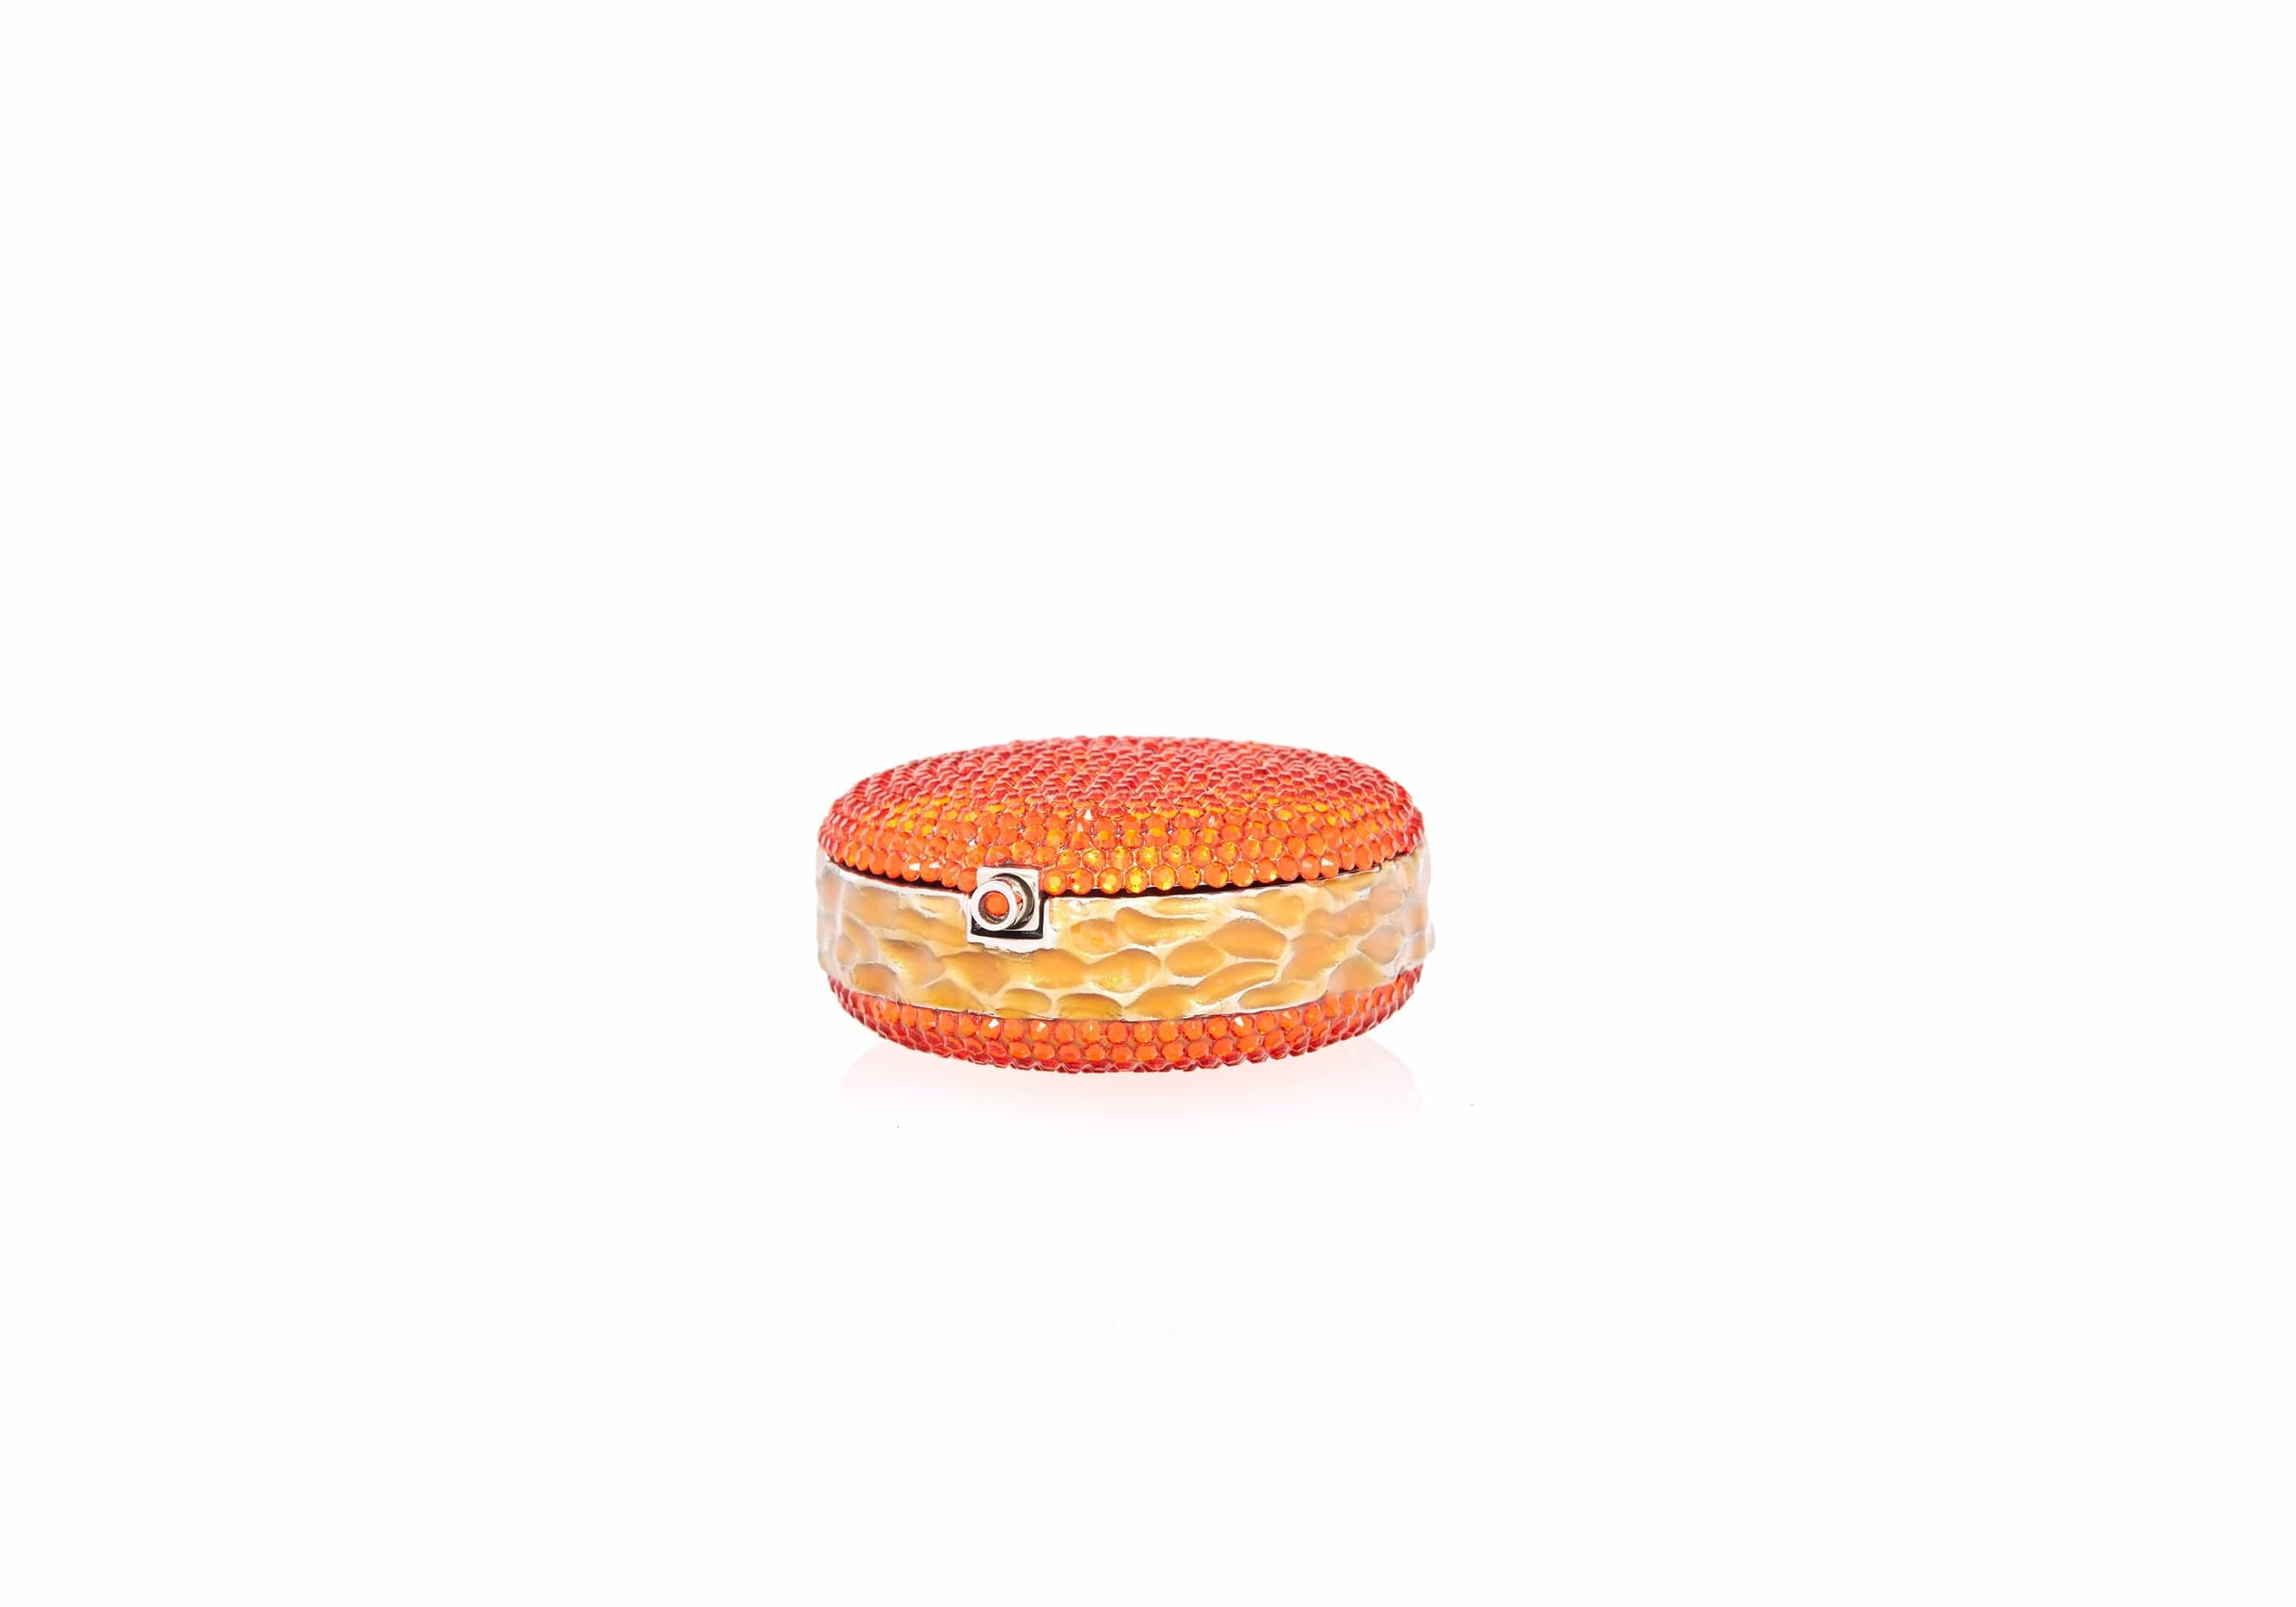 Passionfruit Macaron